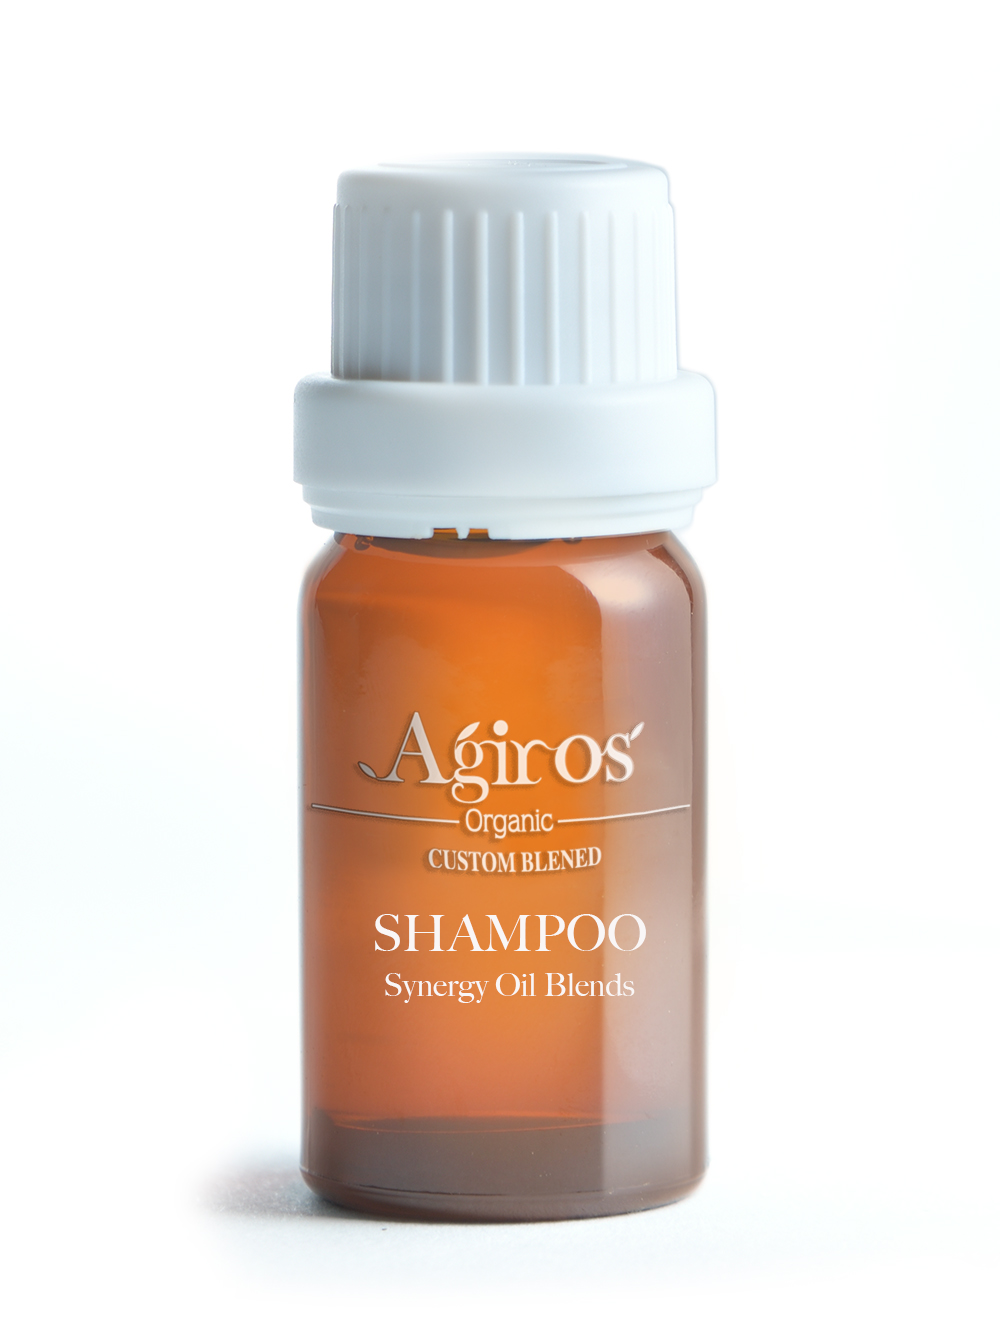 Synergy Oil Blends EO (shampoo)